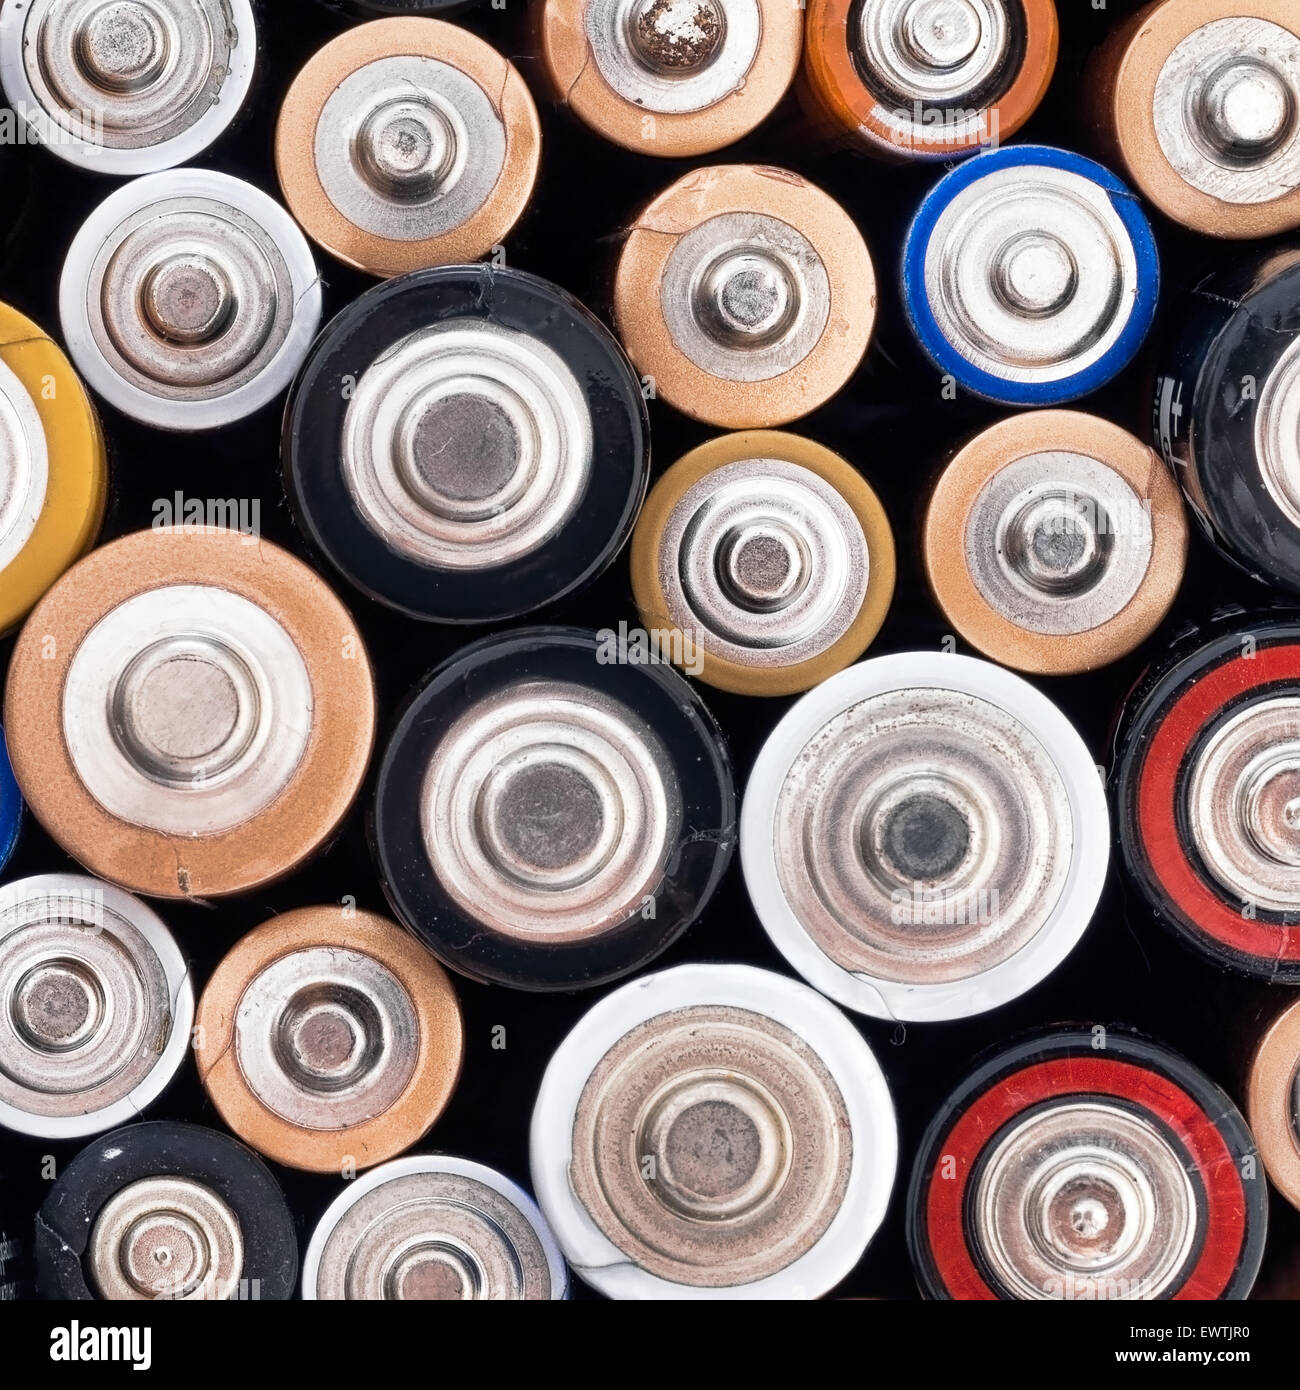 UN-Öko-alkaline-Batterien hautnah. Quadratische Ernte. Stockfoto